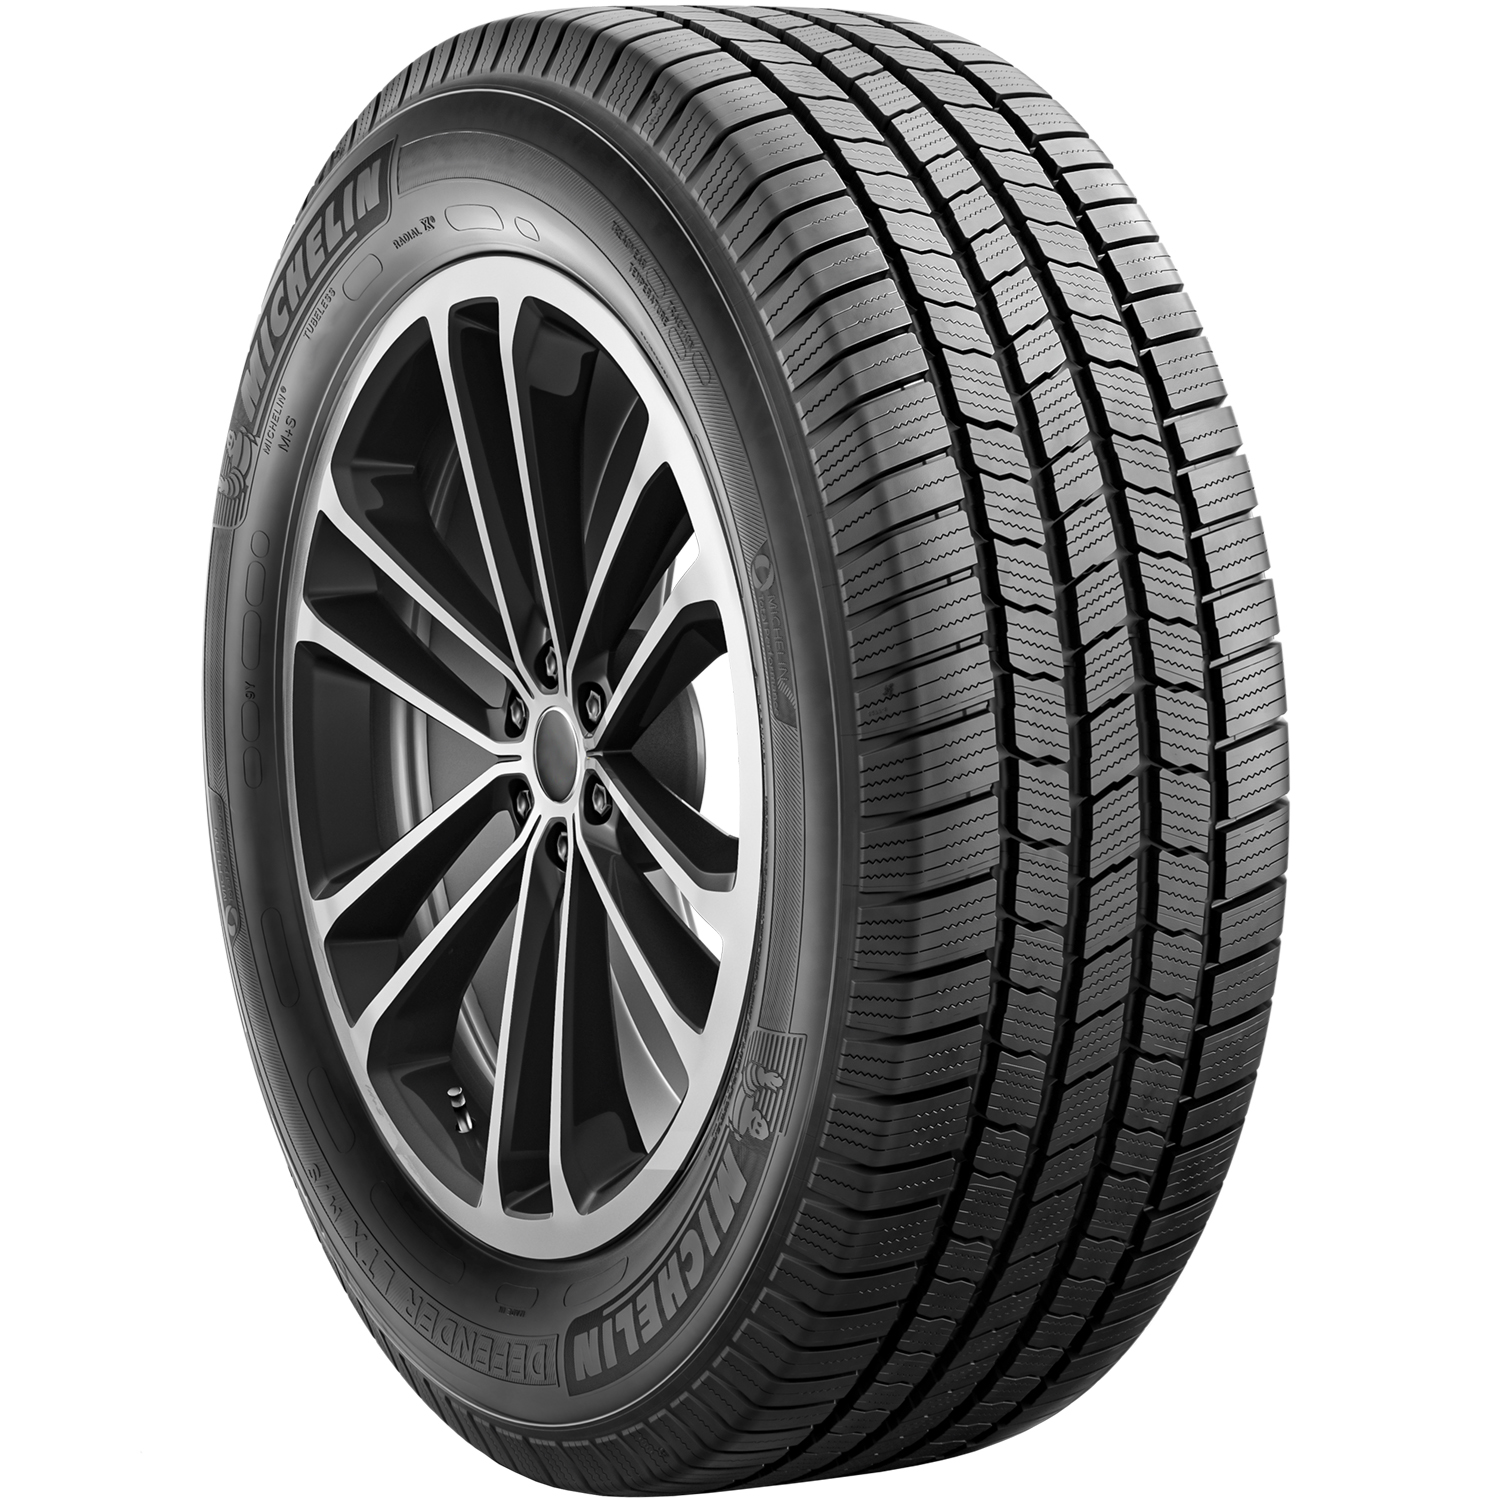 Michelin Defender LTX M/S All Season 235/65R17 104T Light Truck Tire - image 1 of 22